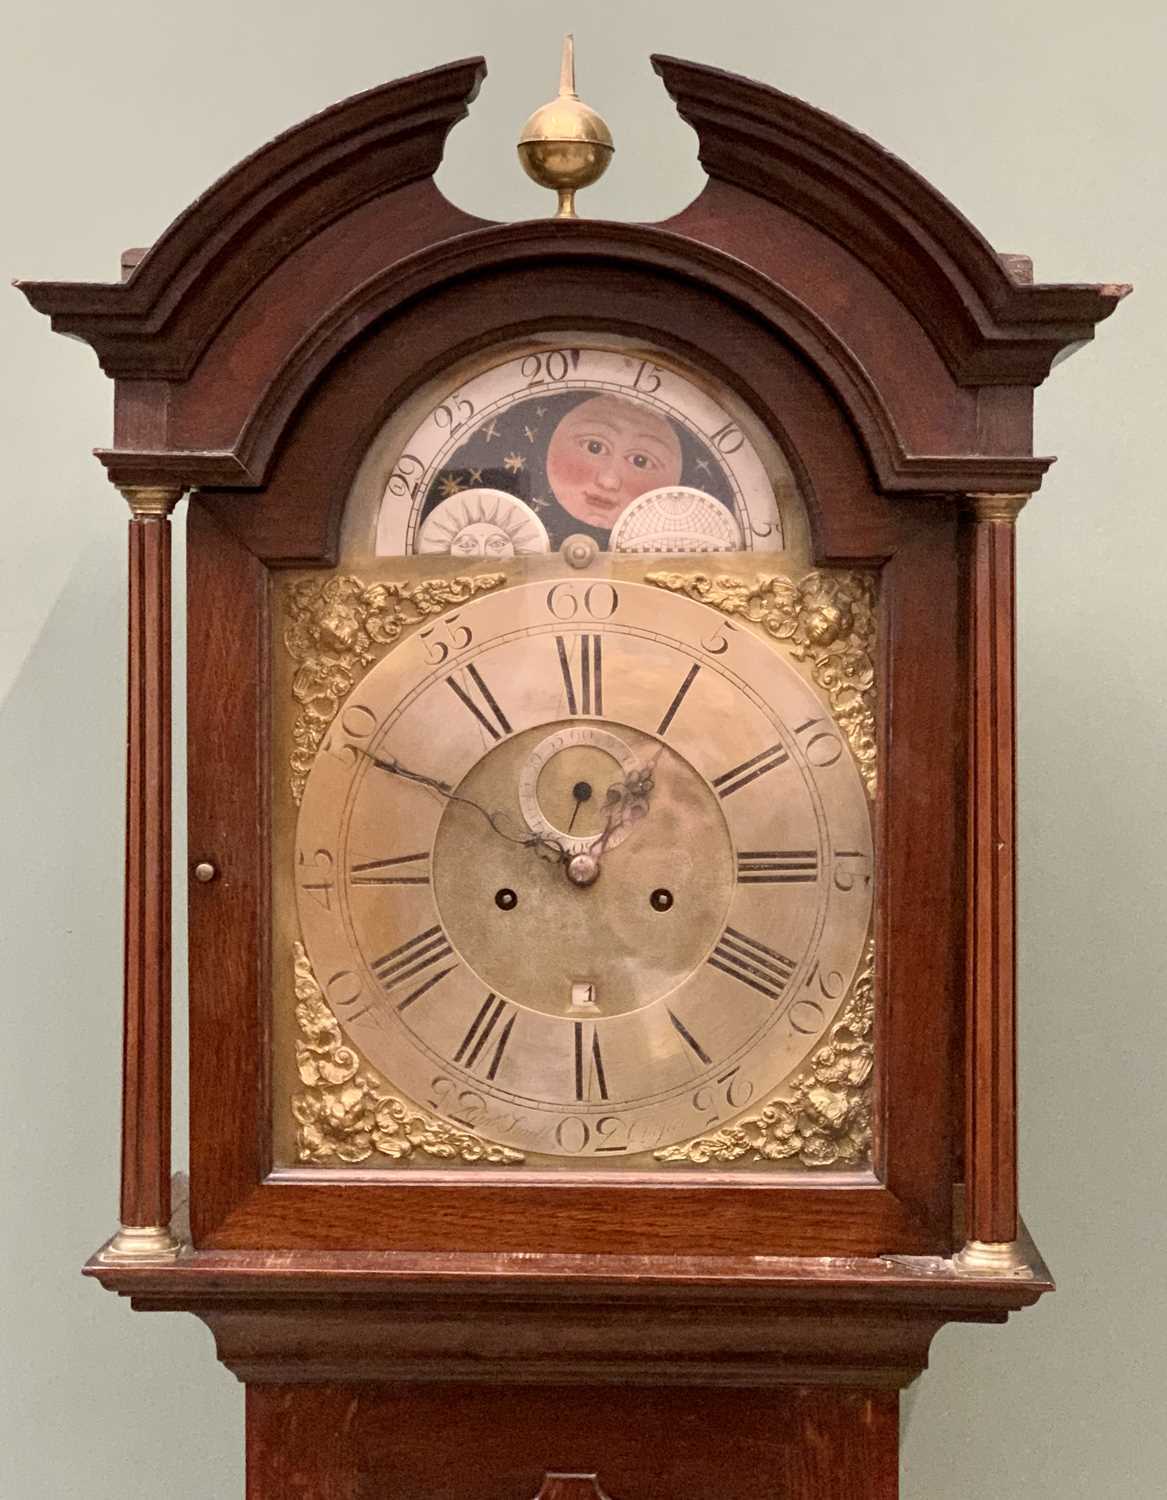 OAK LONGCASE CLOCK CIRCA 1830 by Gabriel Smith Chester, arched top moon phase dial, Roman